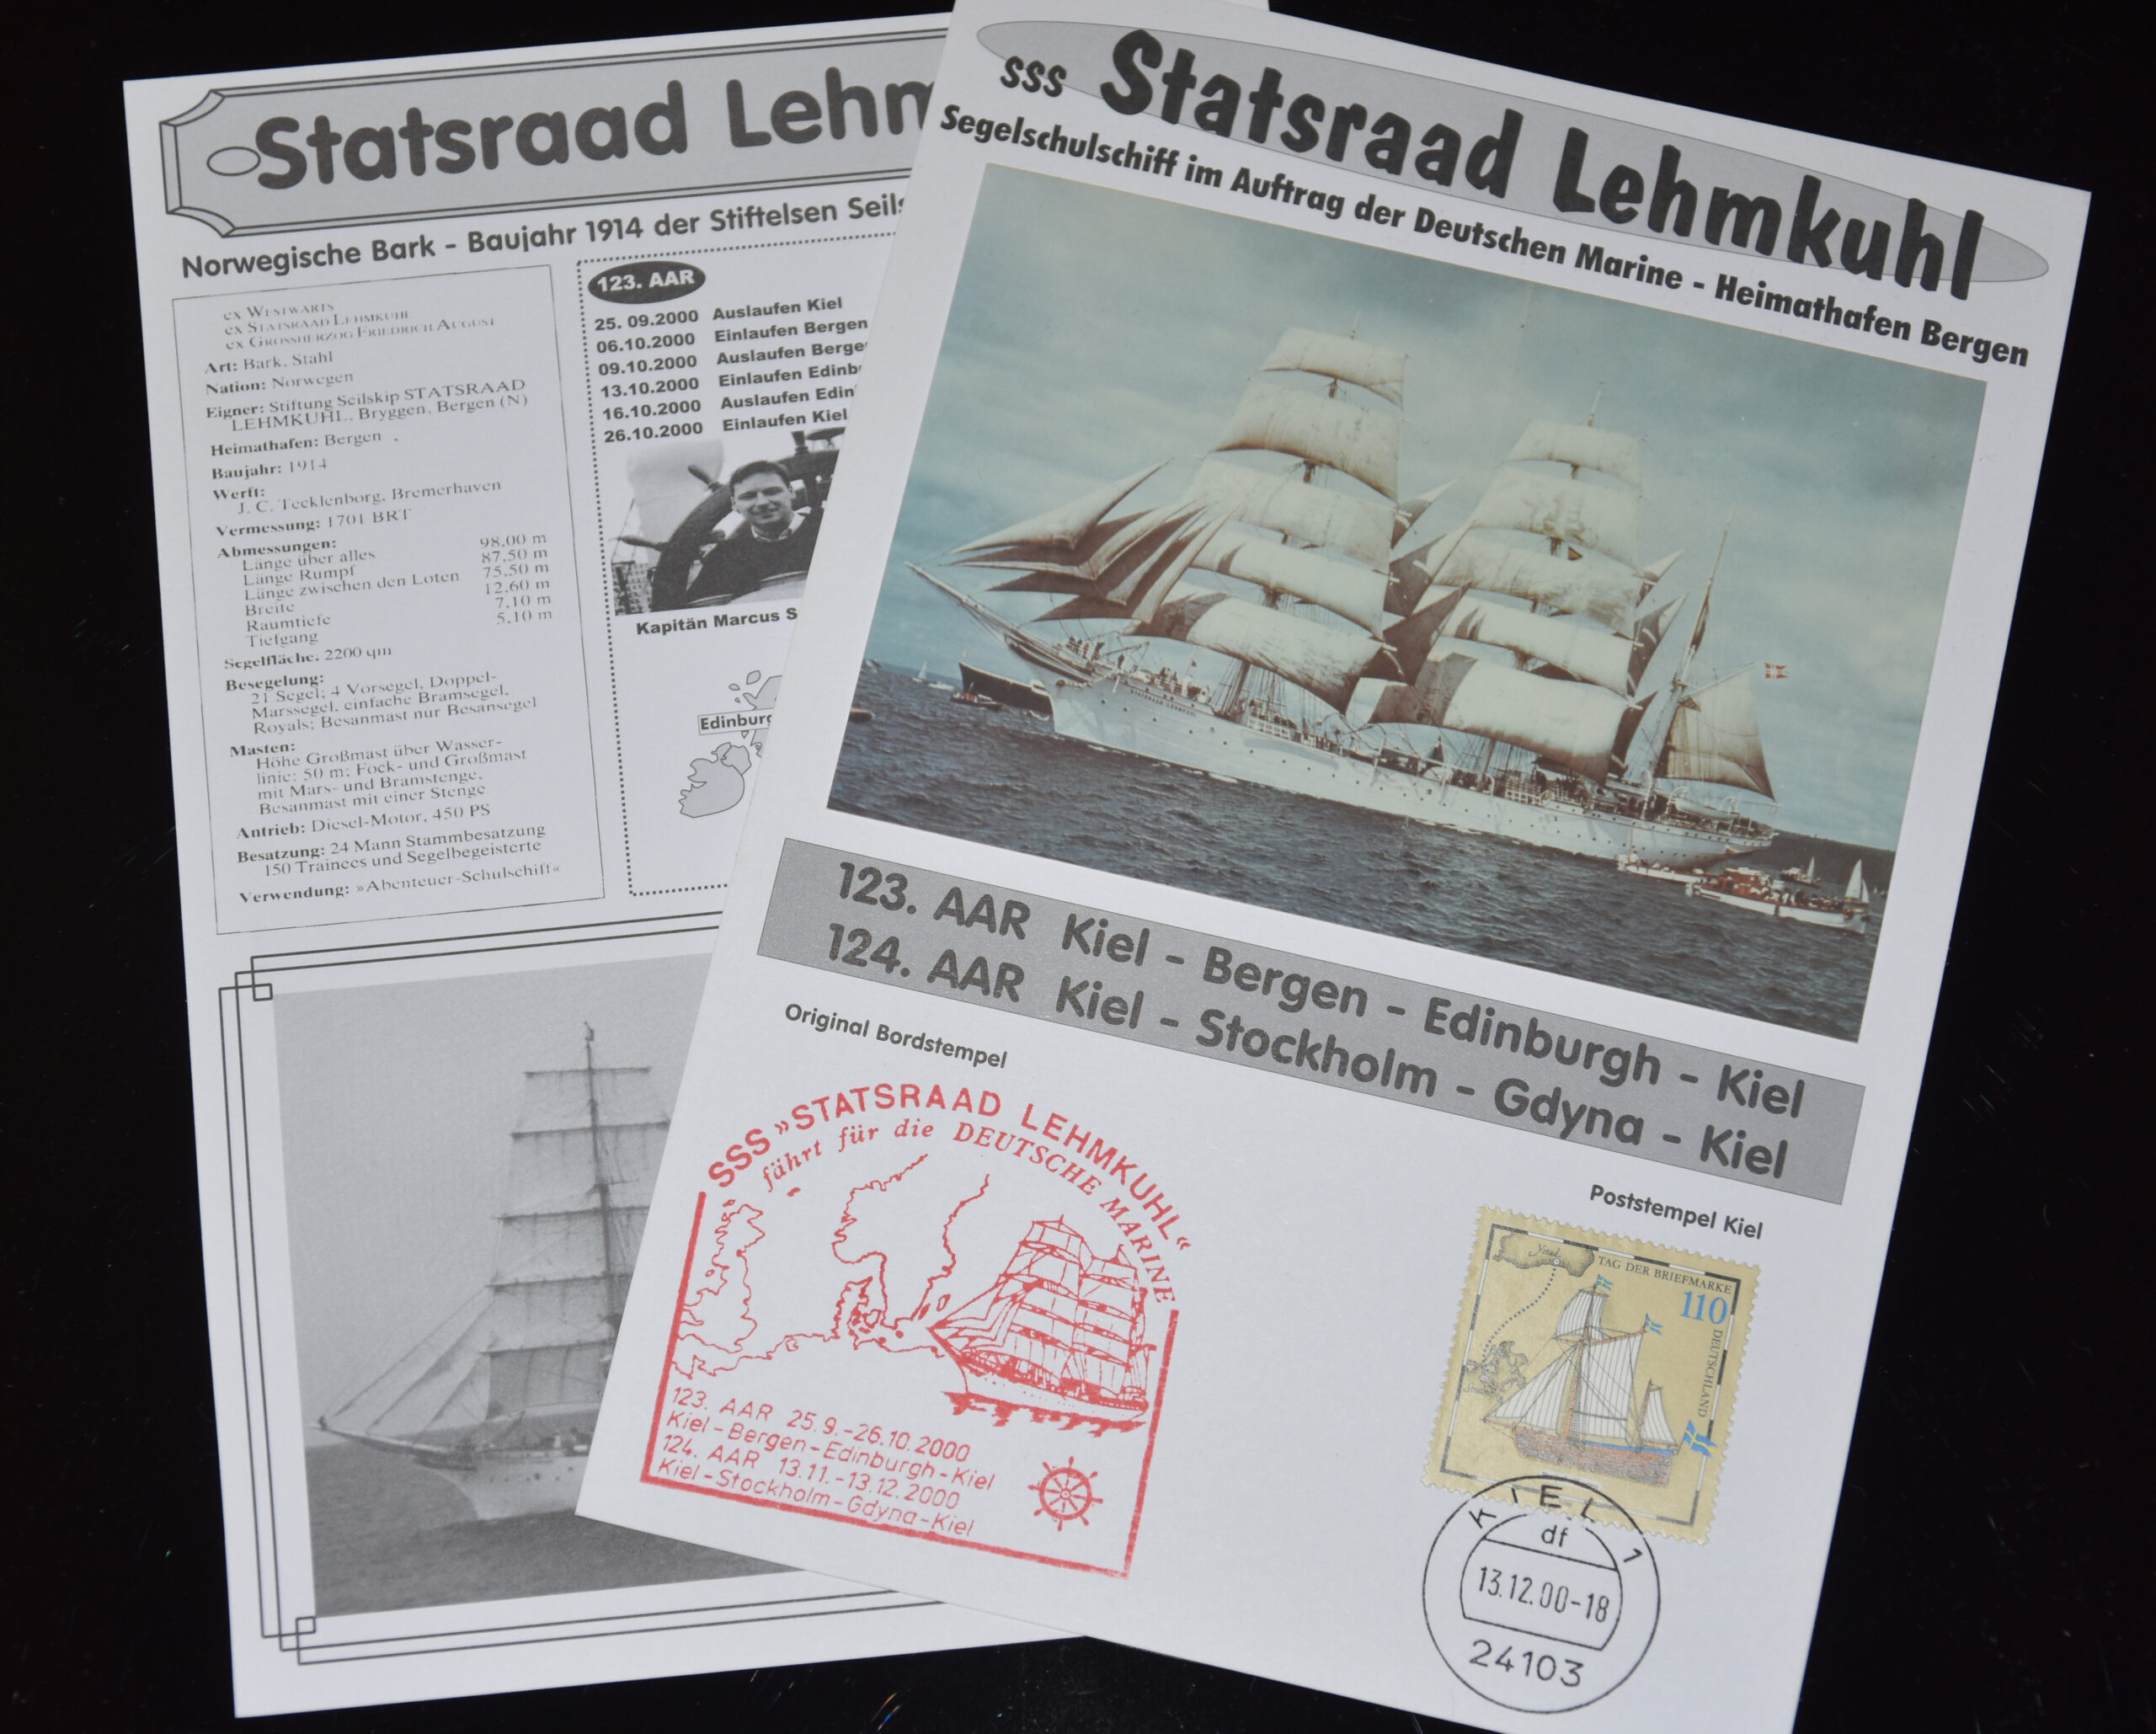 Erfahren Sie etwas über die 123./124. AAR des SSS „Statsraad Lehmkuhl“.